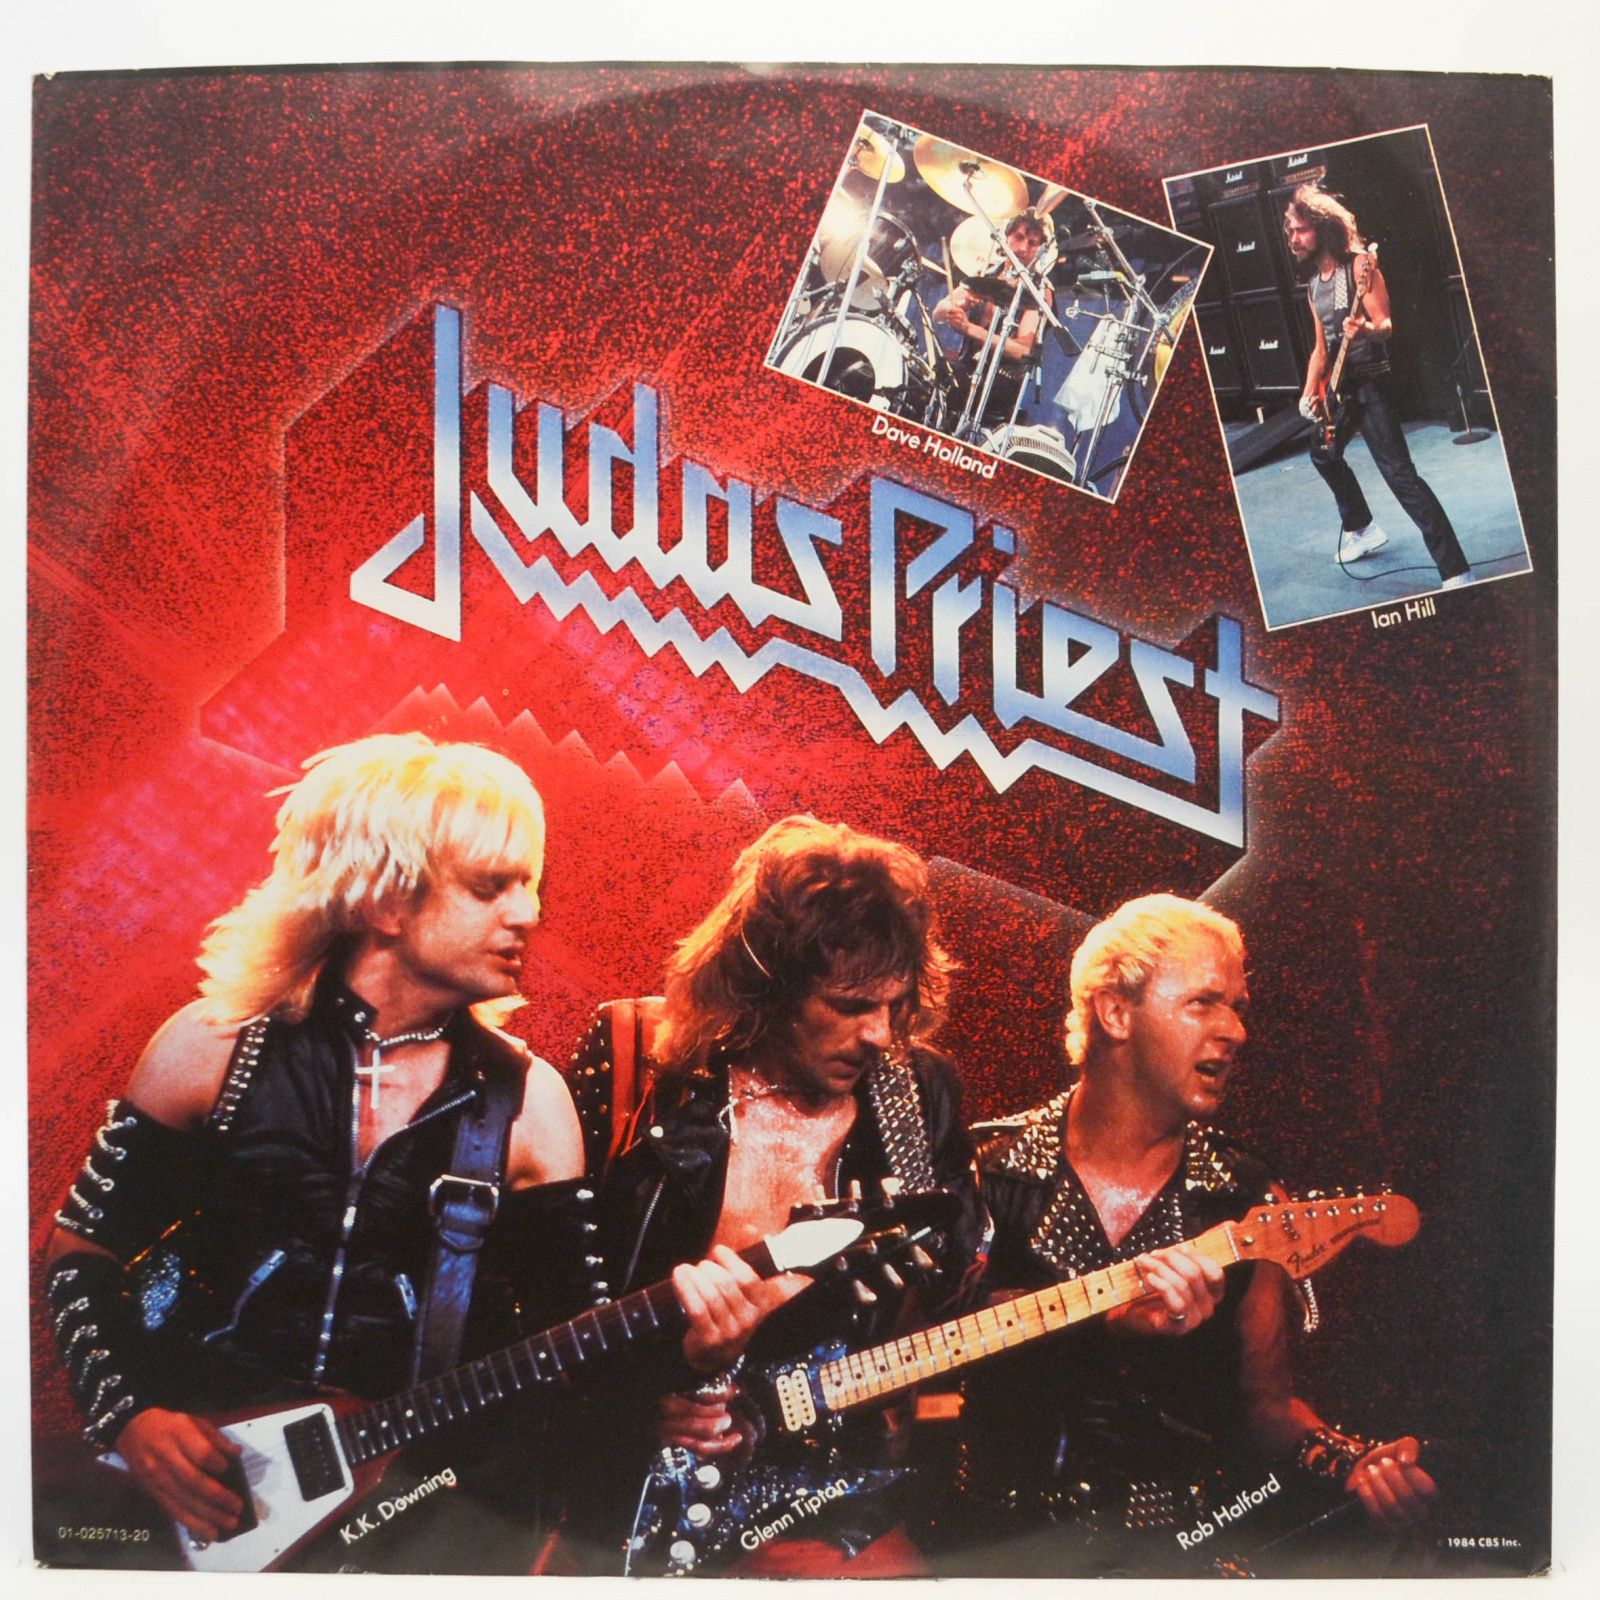 Defenders of the faith. Judas Priest. Группа джудас прист. Judas Priest 1970. Judas Priest дискография.